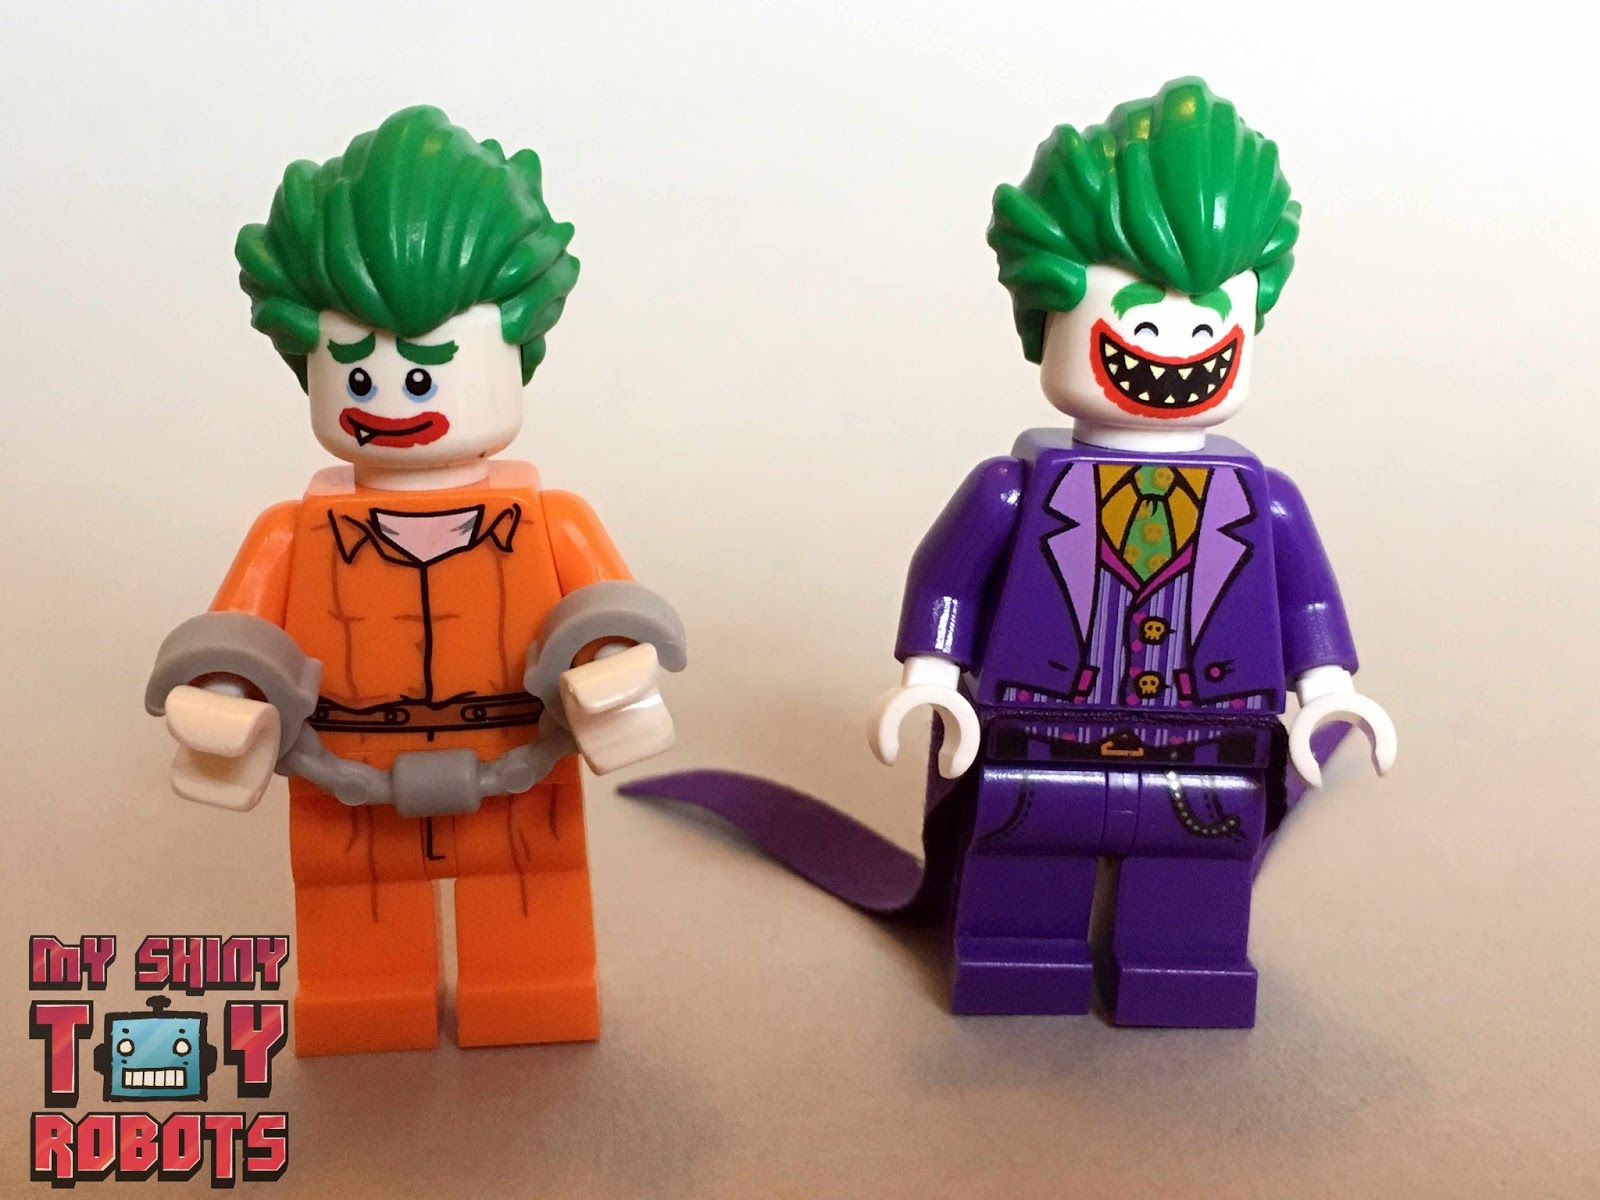 My Shiny Toy Robots: Toybox REVIEW: The LEGO Batman Movie Set 70900 The  Joker Balloon Escape